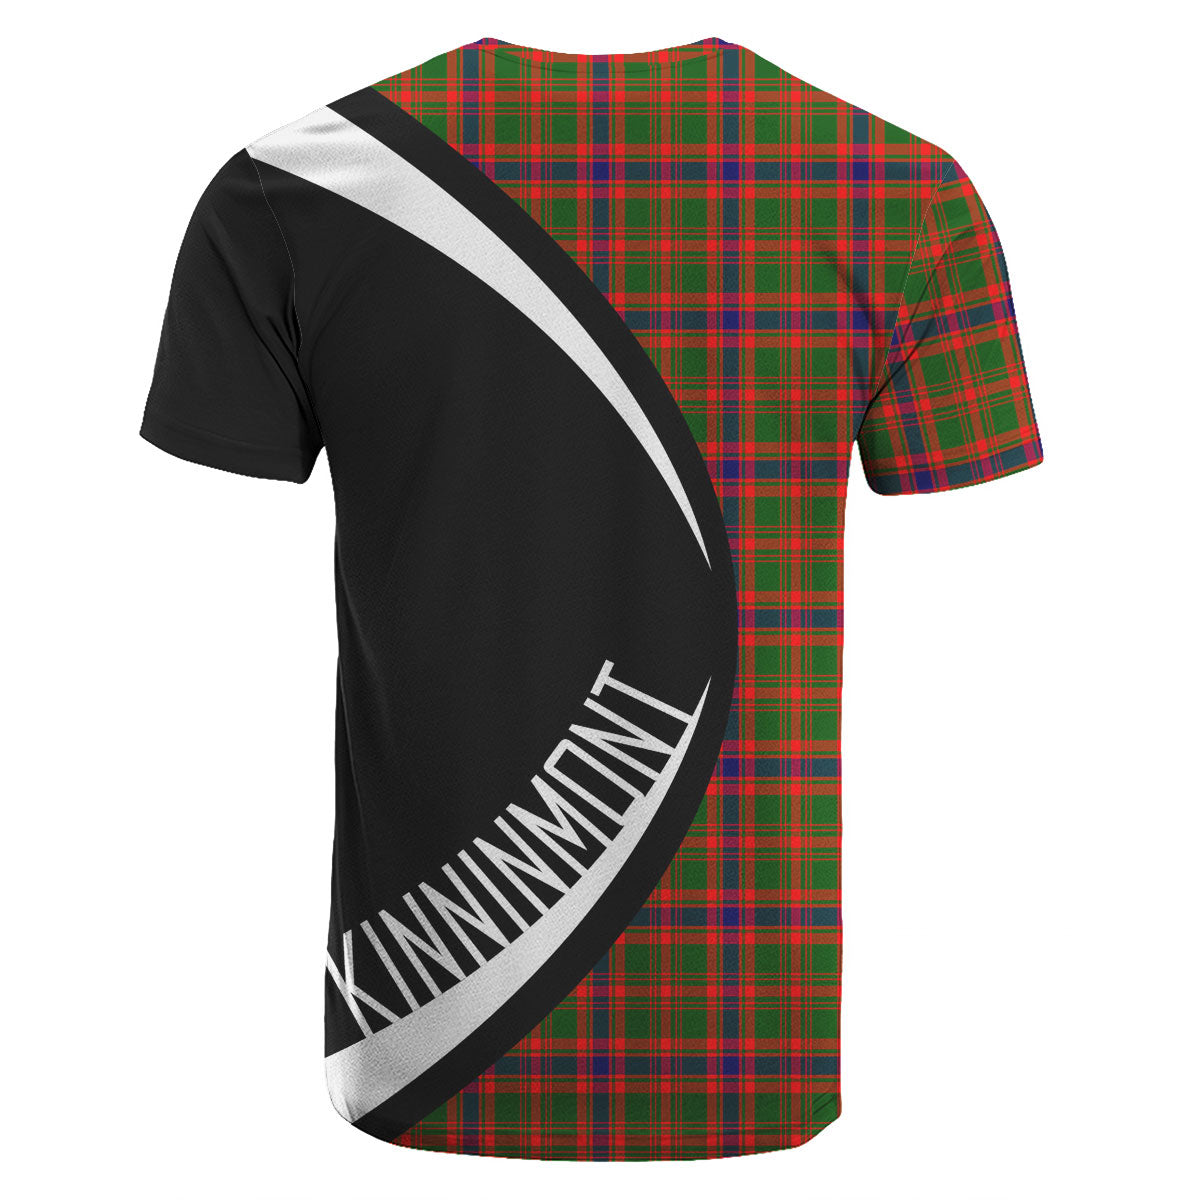 Kinninmont Tartan Crest T-shirt - Circle Style